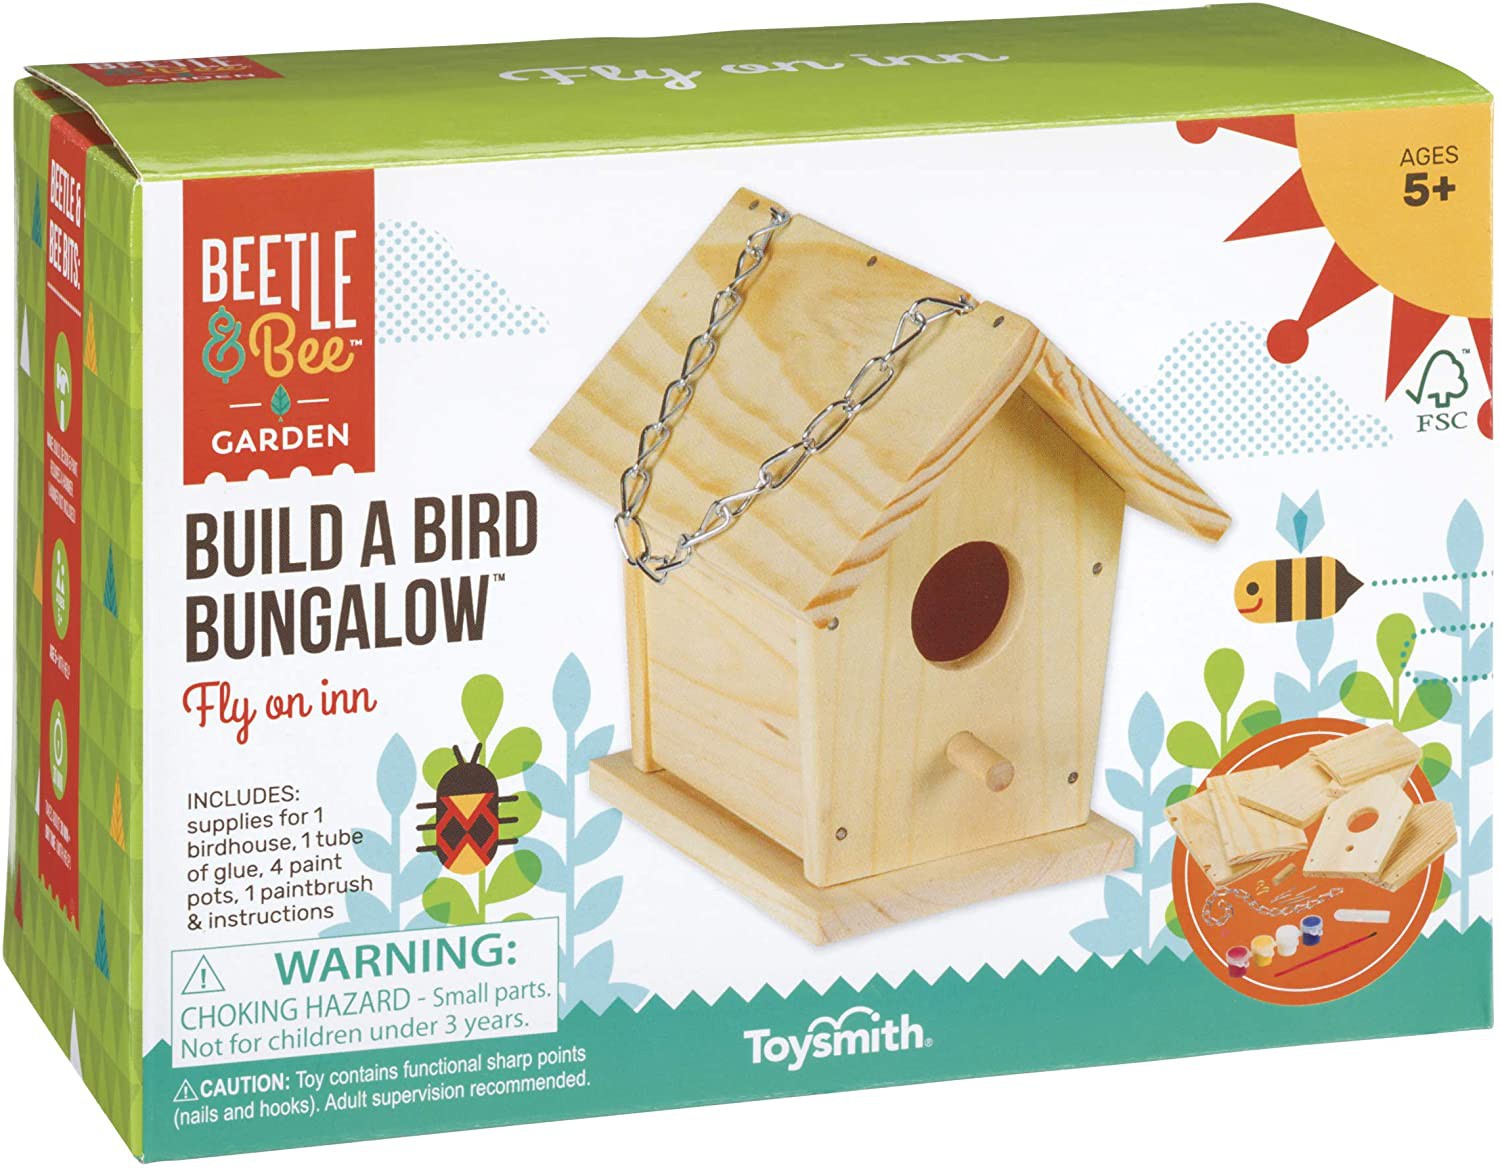 Build A Bird Bungalow, Backyard Birdhouse Kit with Fsc Certified Wood 